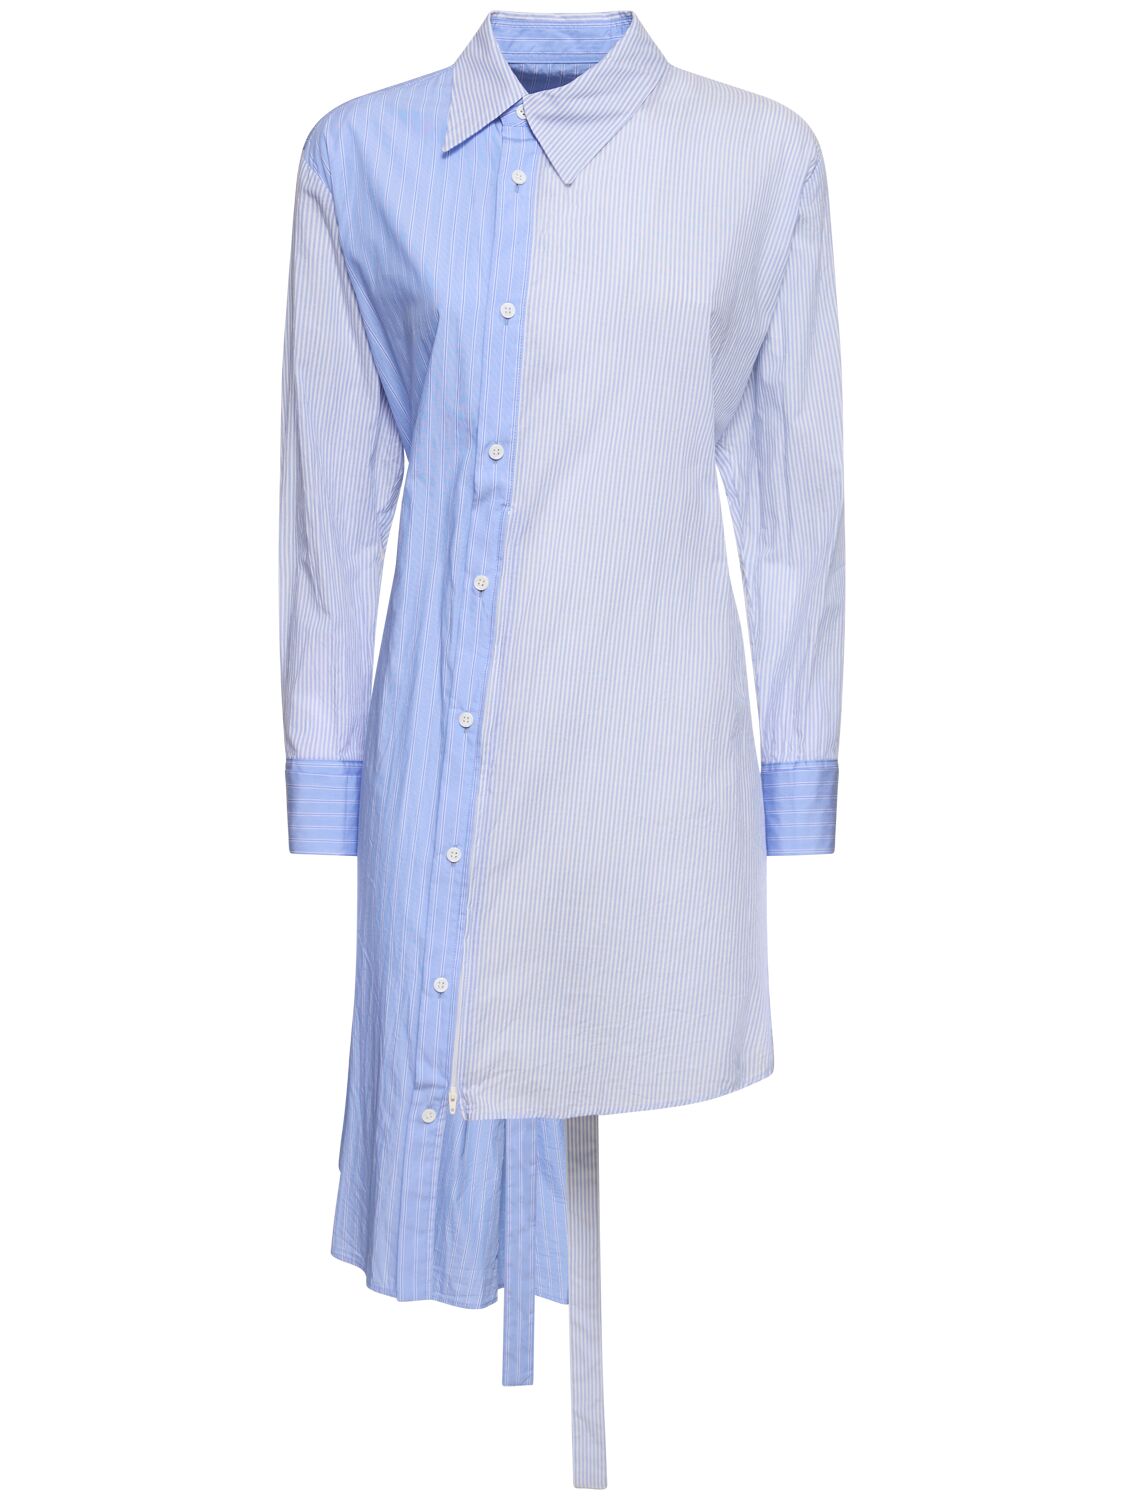 Yohji Yamamoto Striped Asymmetrical Cotton Shirt W/ Zip In Light Blue,white